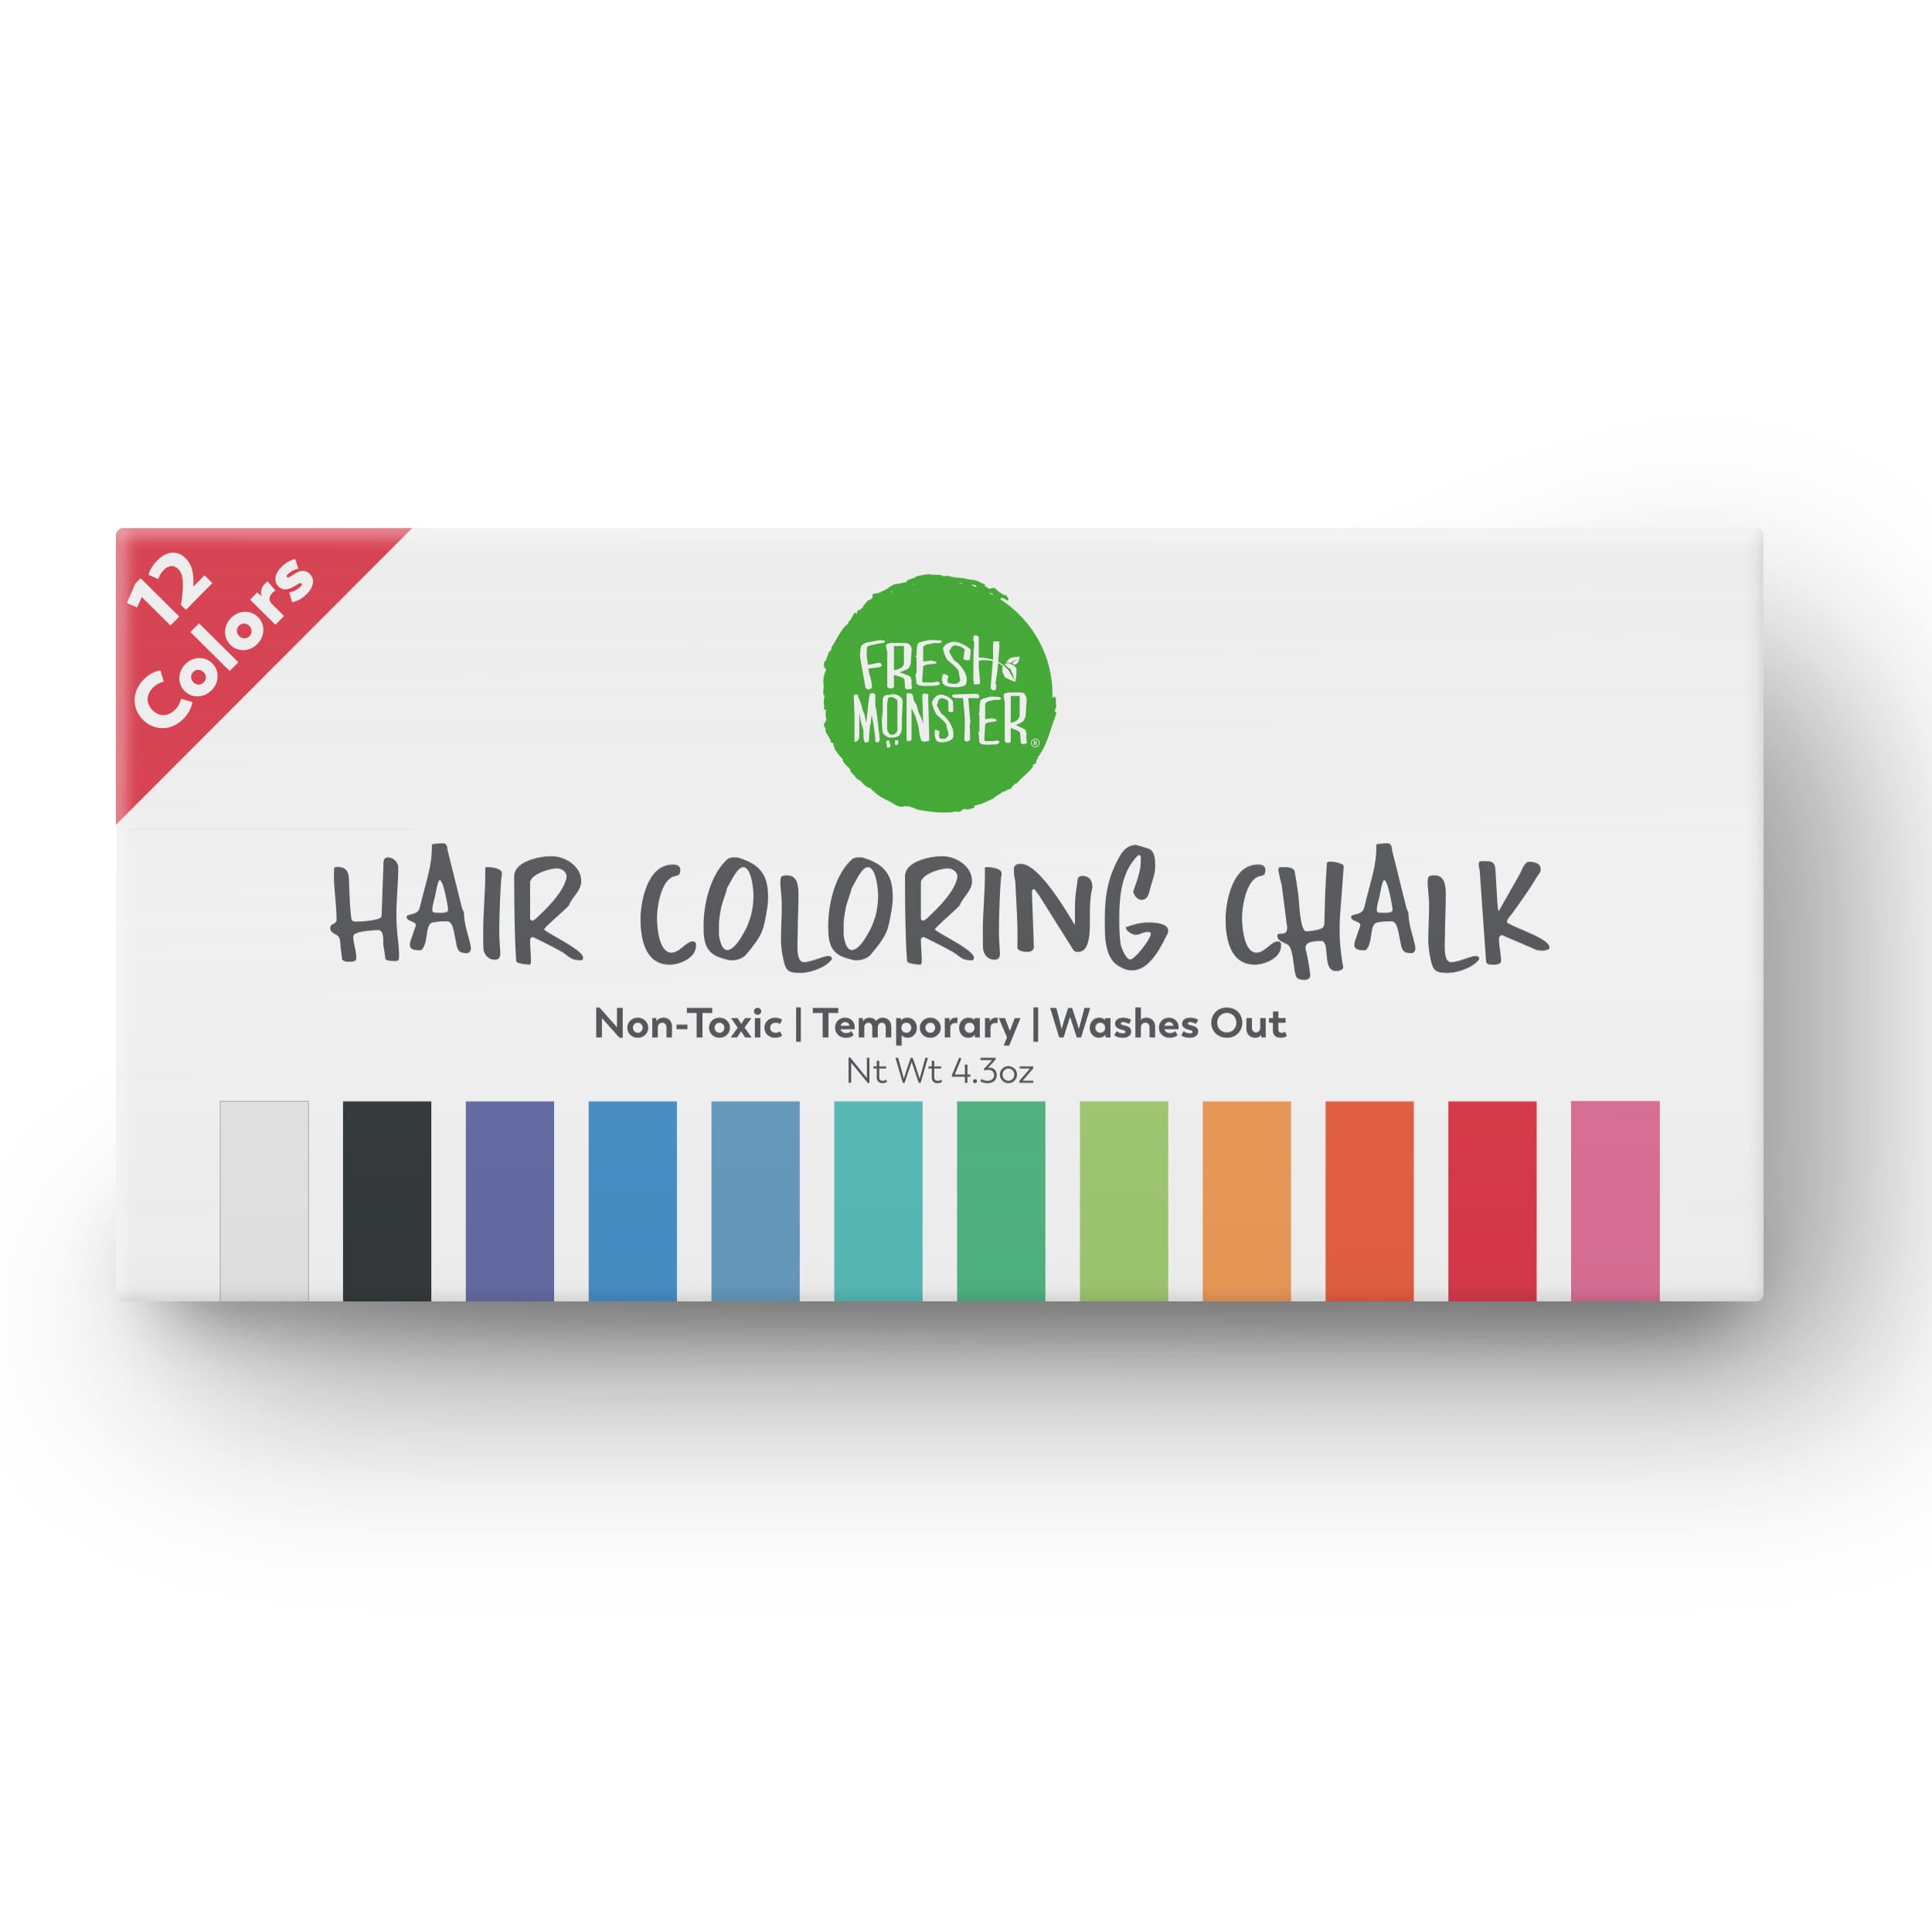 Chalk Couture Chalk Hair Color